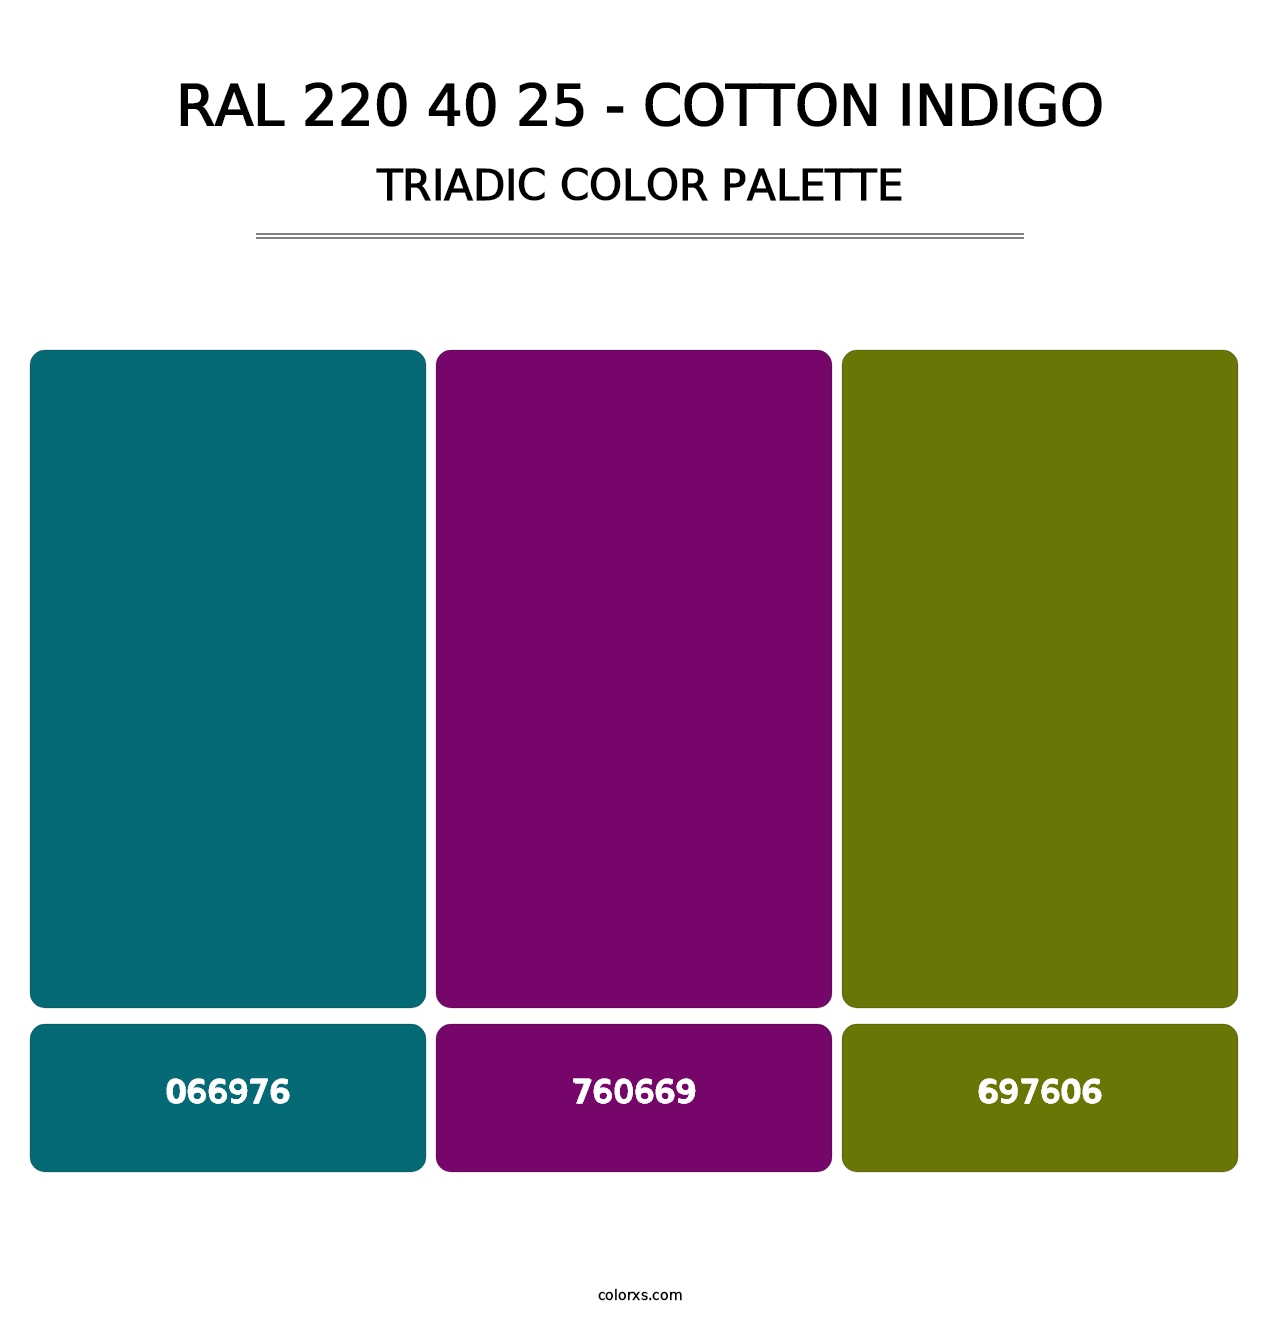 RAL 220 40 25 - Cotton Indigo - Triadic Color Palette